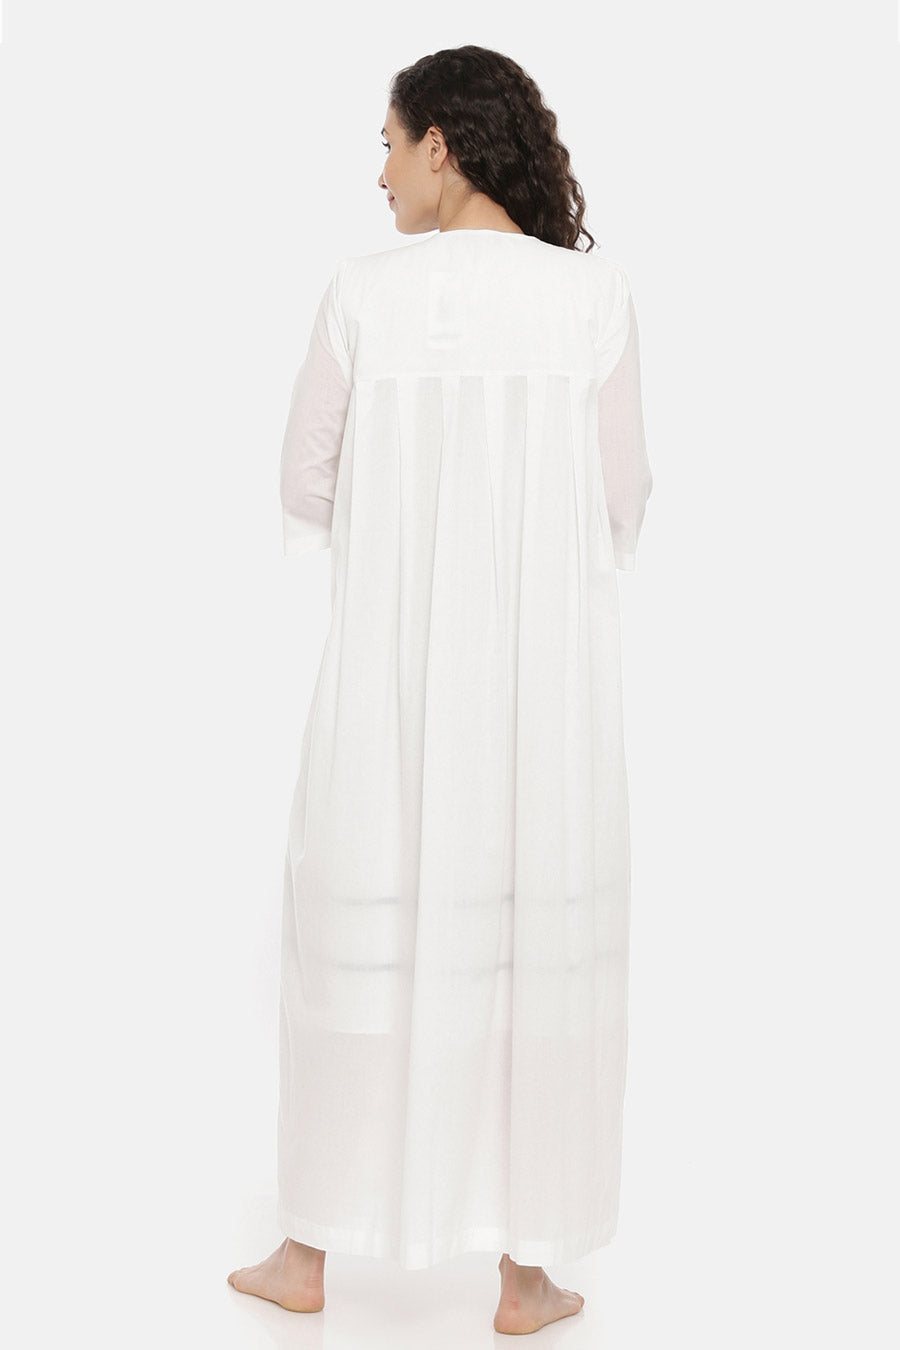 White Dress & Overlay Nightwear Set